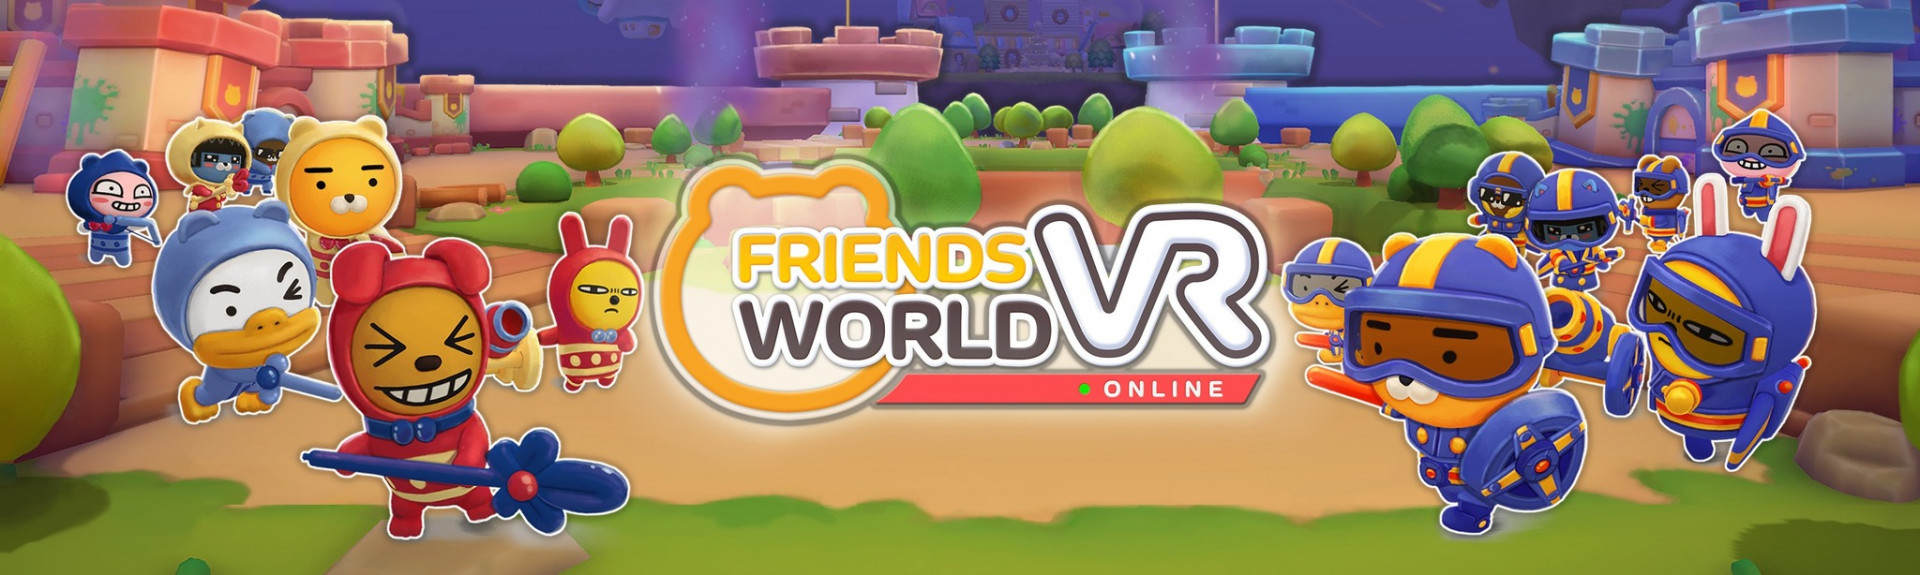 Mundo VR de Friends En línea - Beta